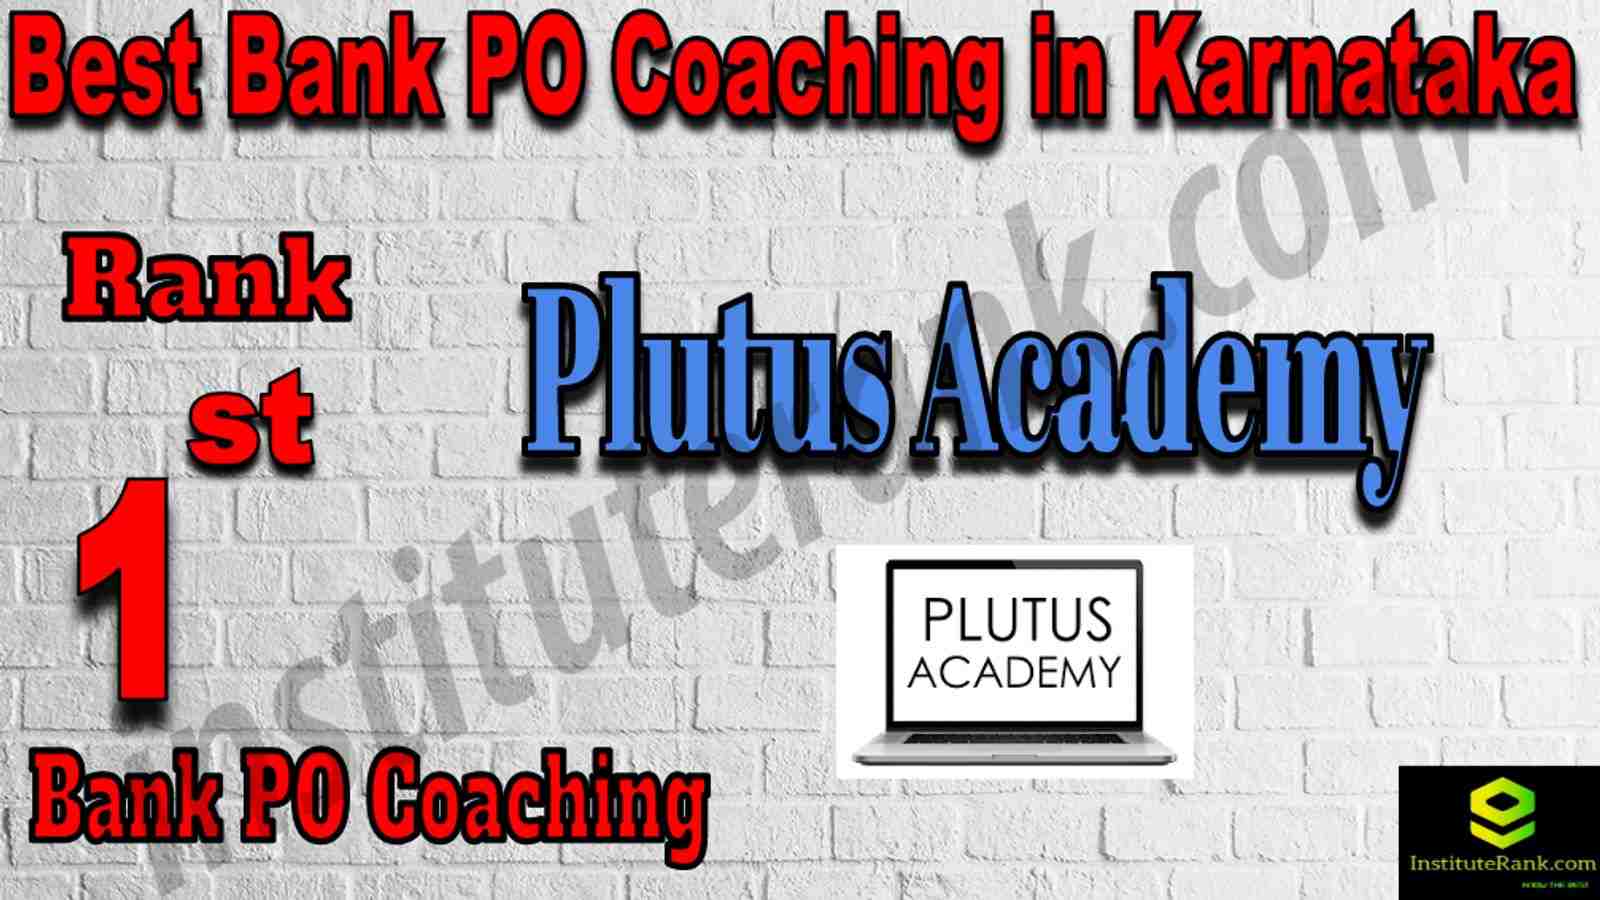 1st Best Bank PO Coaching in Karnataka